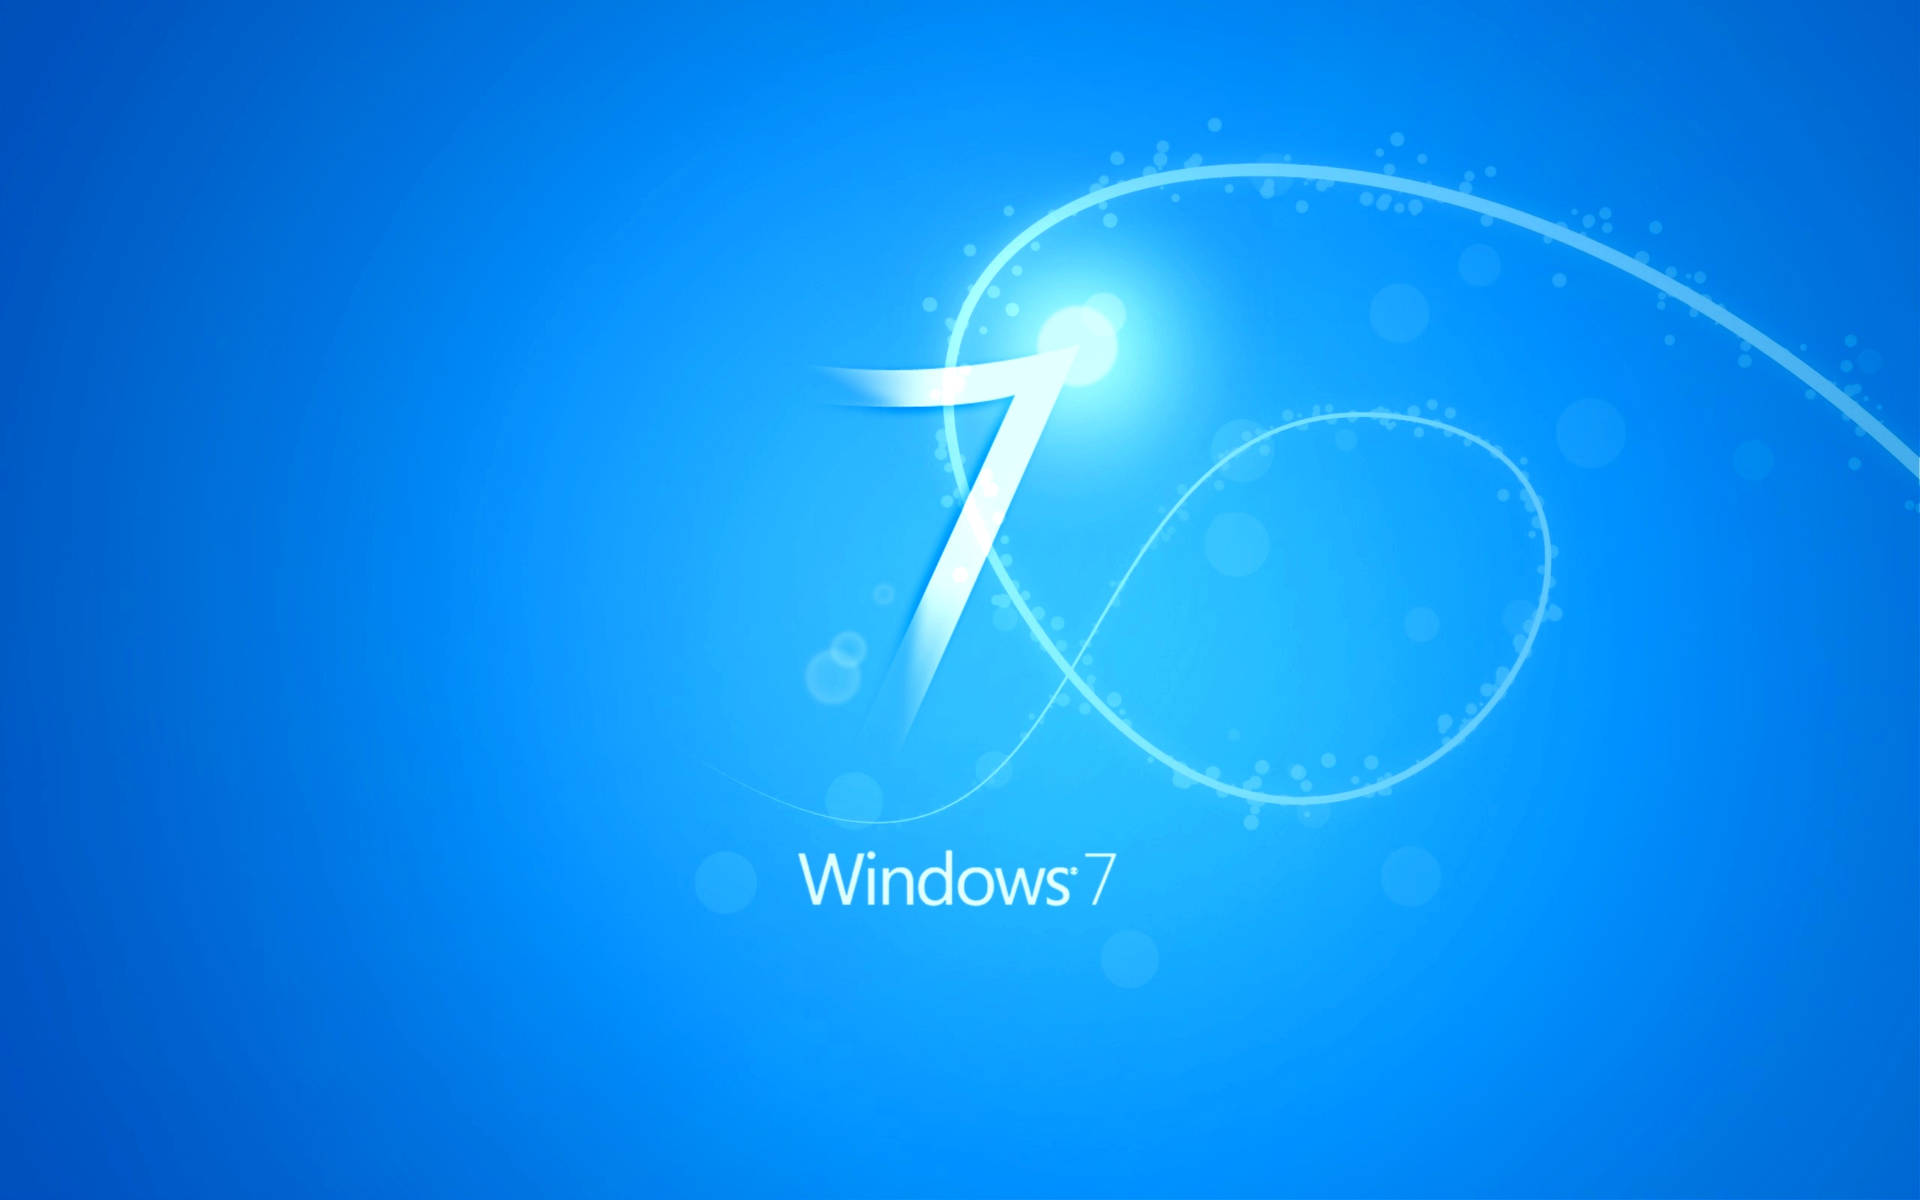 Enjoy A Bright Blue Windows 7 Desktop Wallpaper